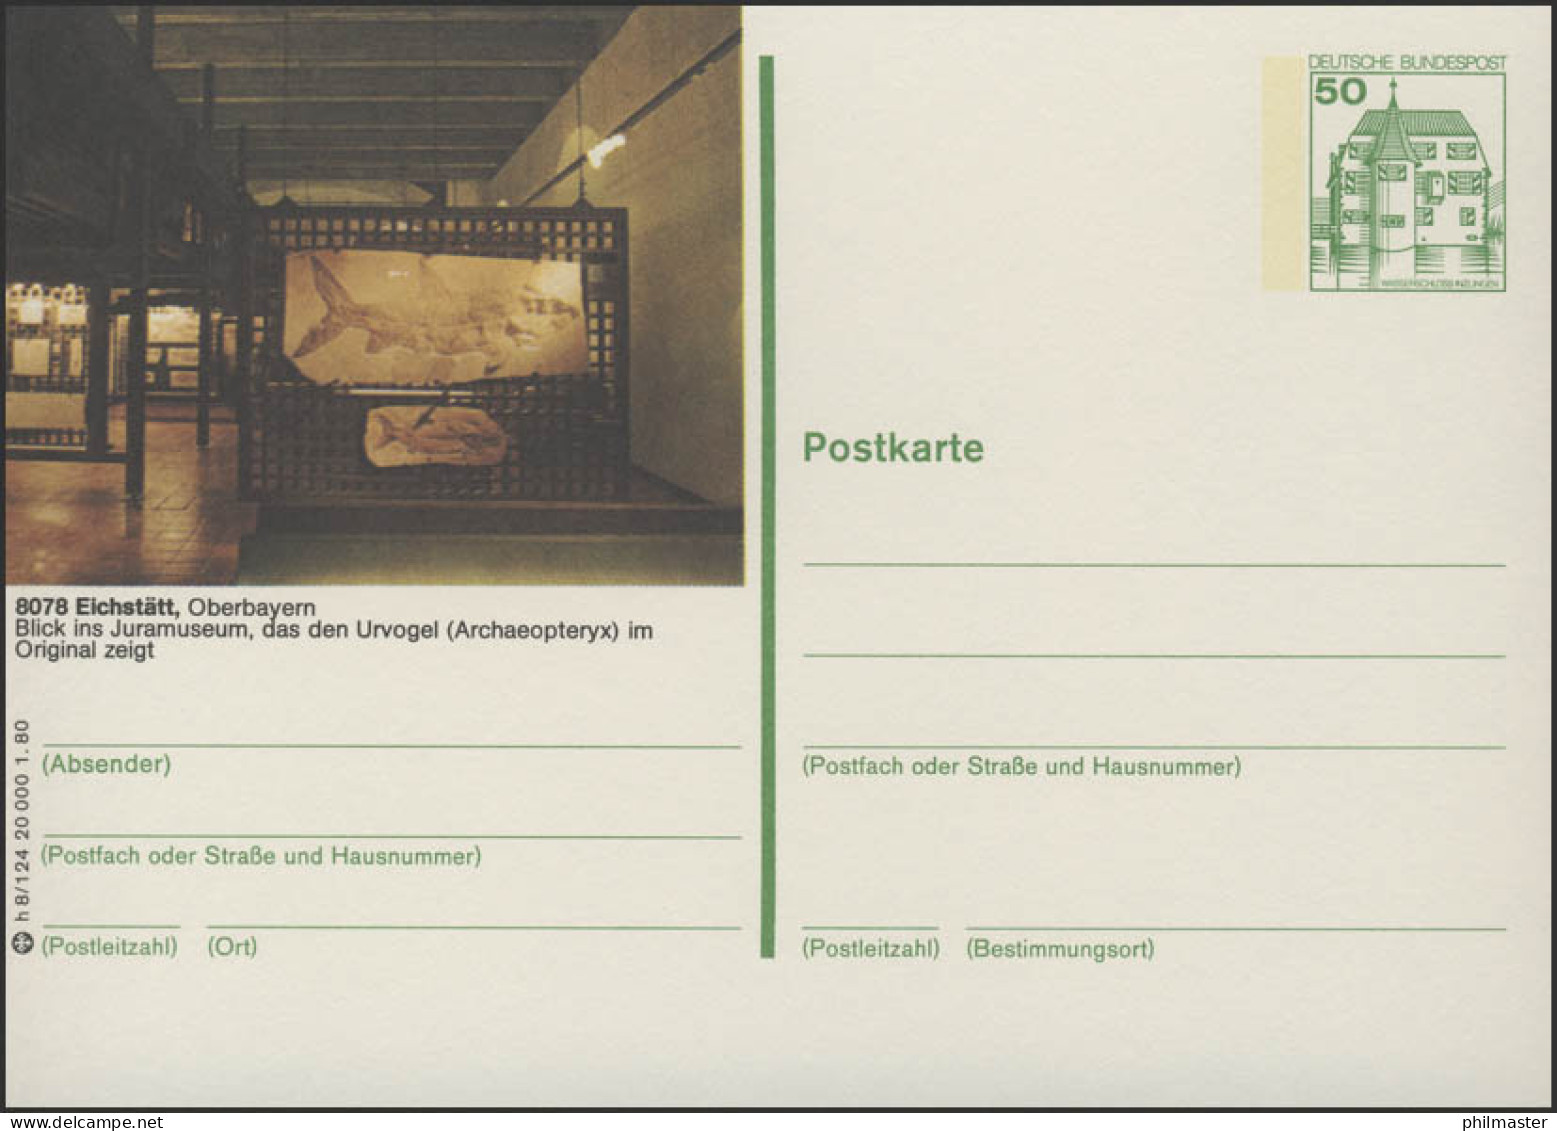 P130-h8/124 - 8078 Eichstädt, Jura-Museum ** - Cartoline Illustrate - Nuovi